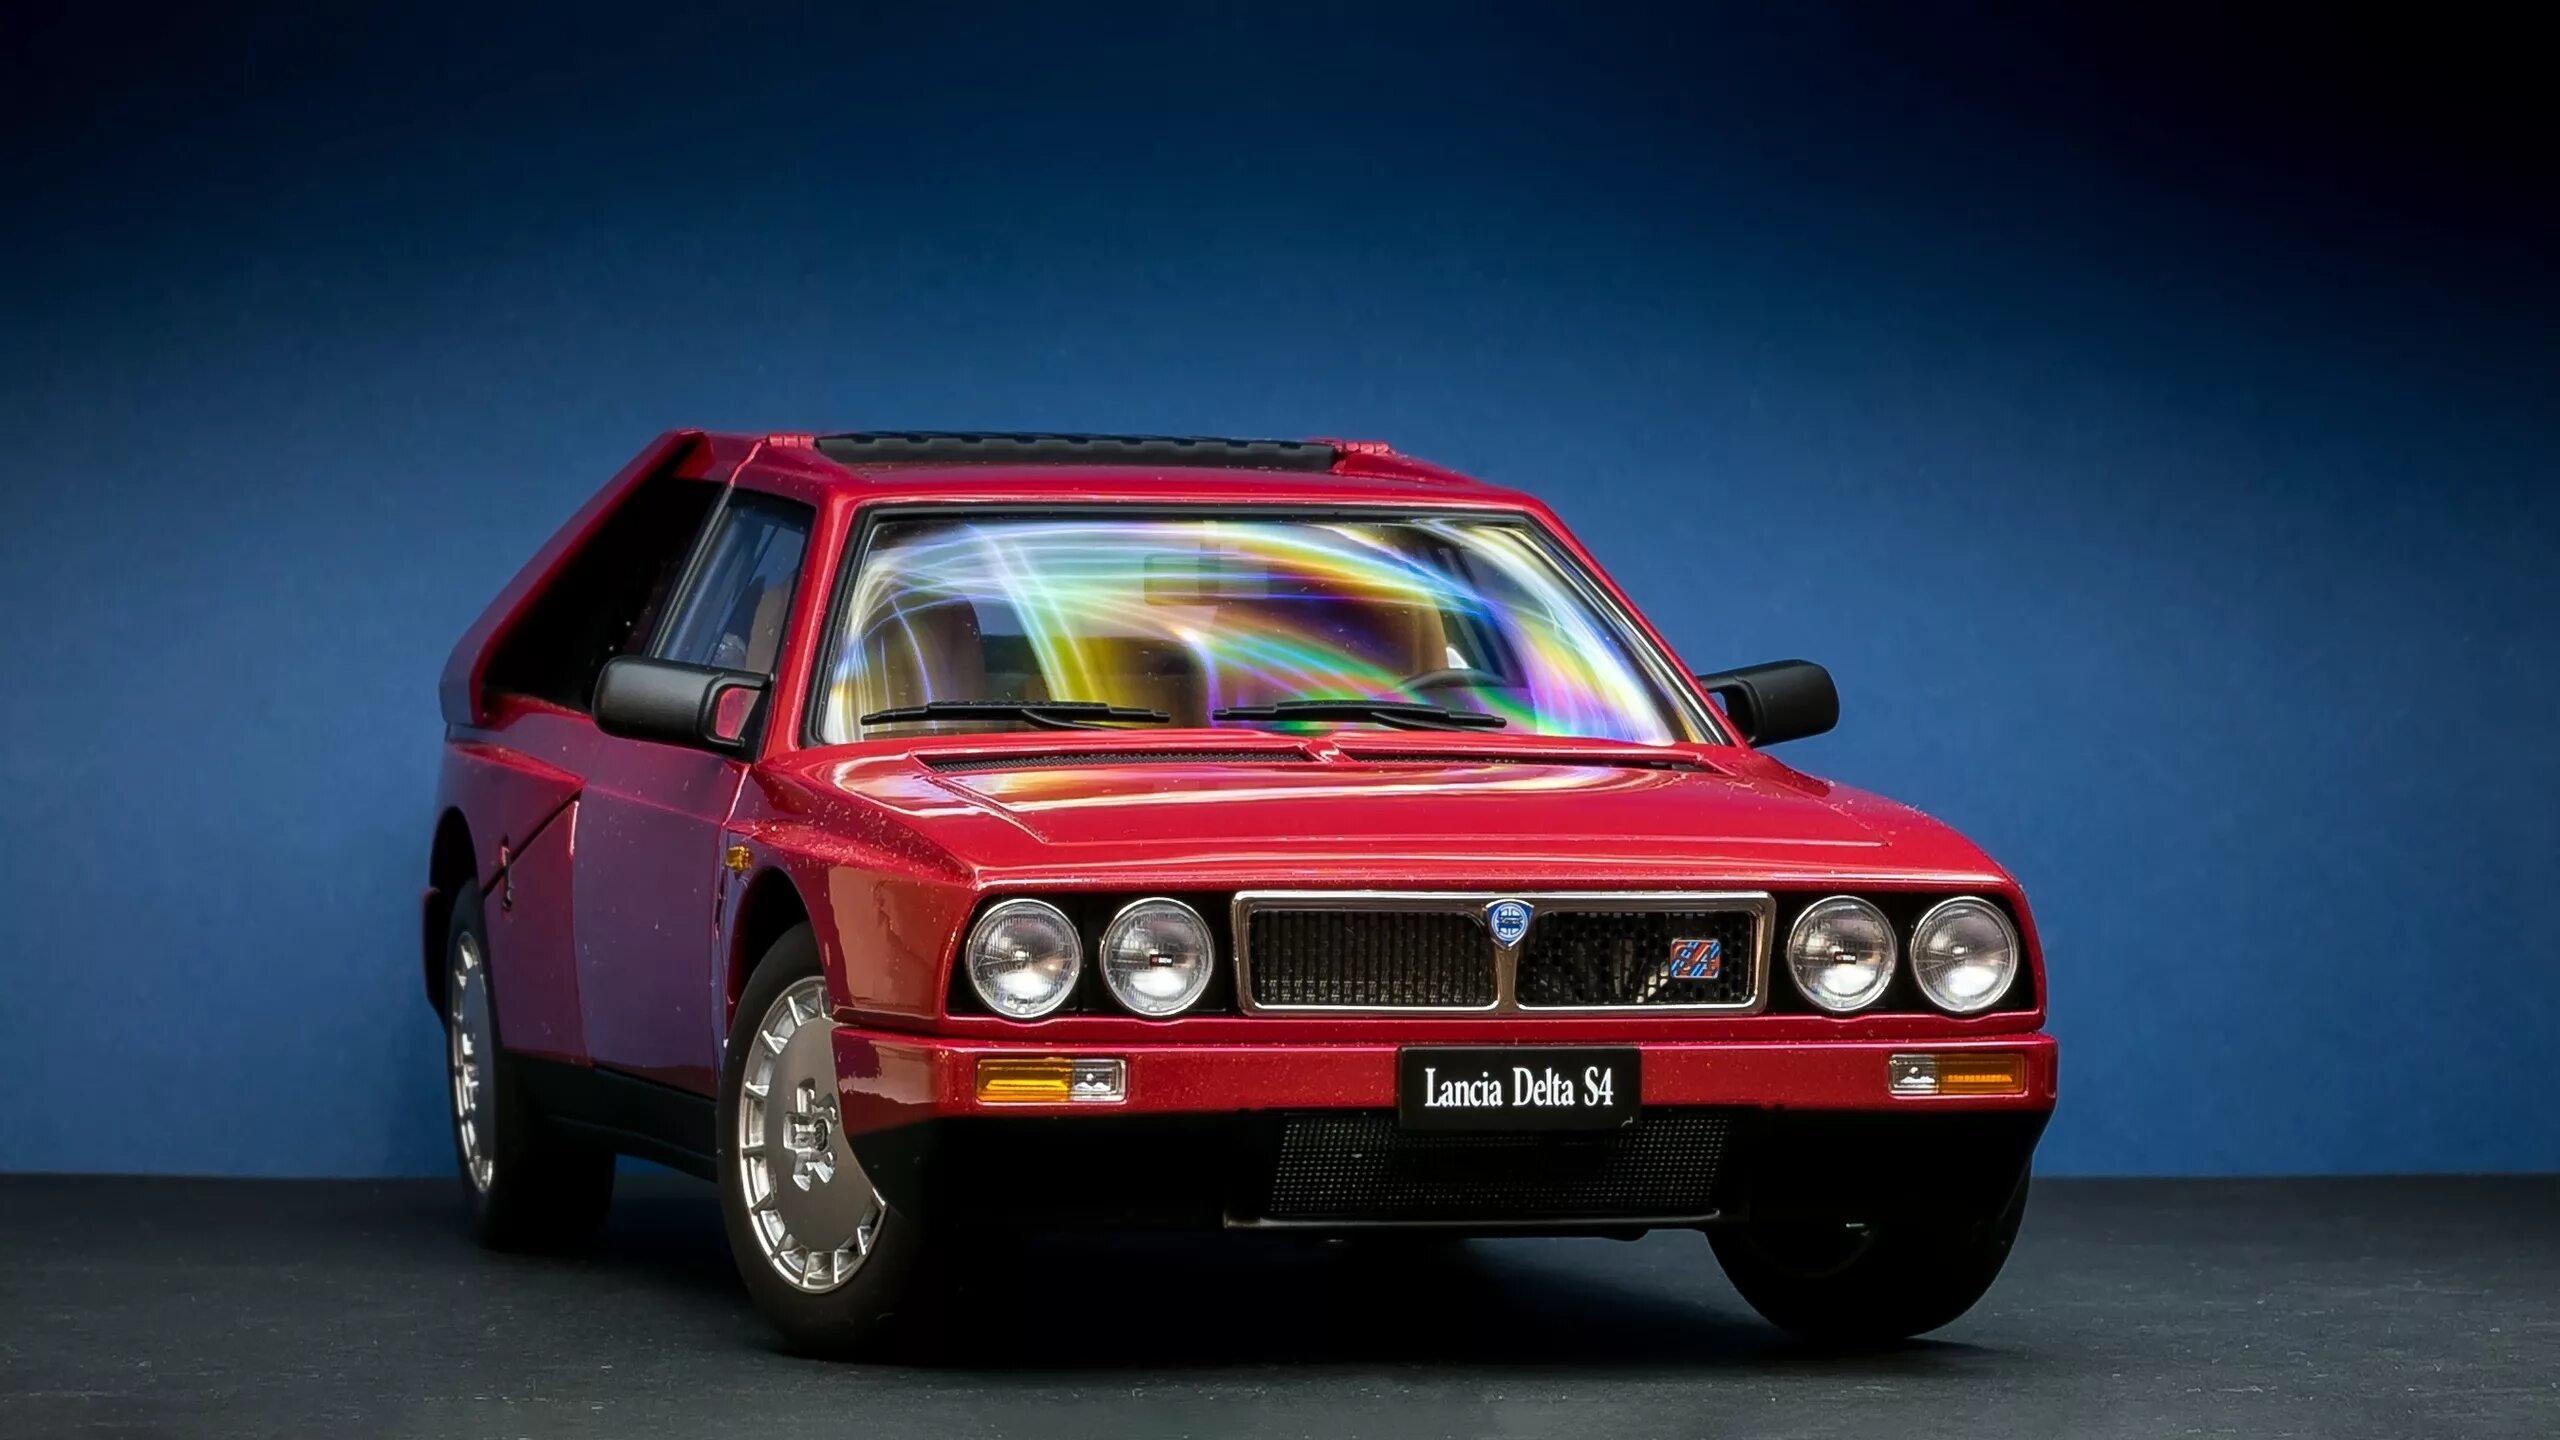 Сток s. Lancia Delta s4 Сток. Lancia Delta s4 двигатель. Лянча Дельта с4. Lancia Delta integrale hot Wheels.